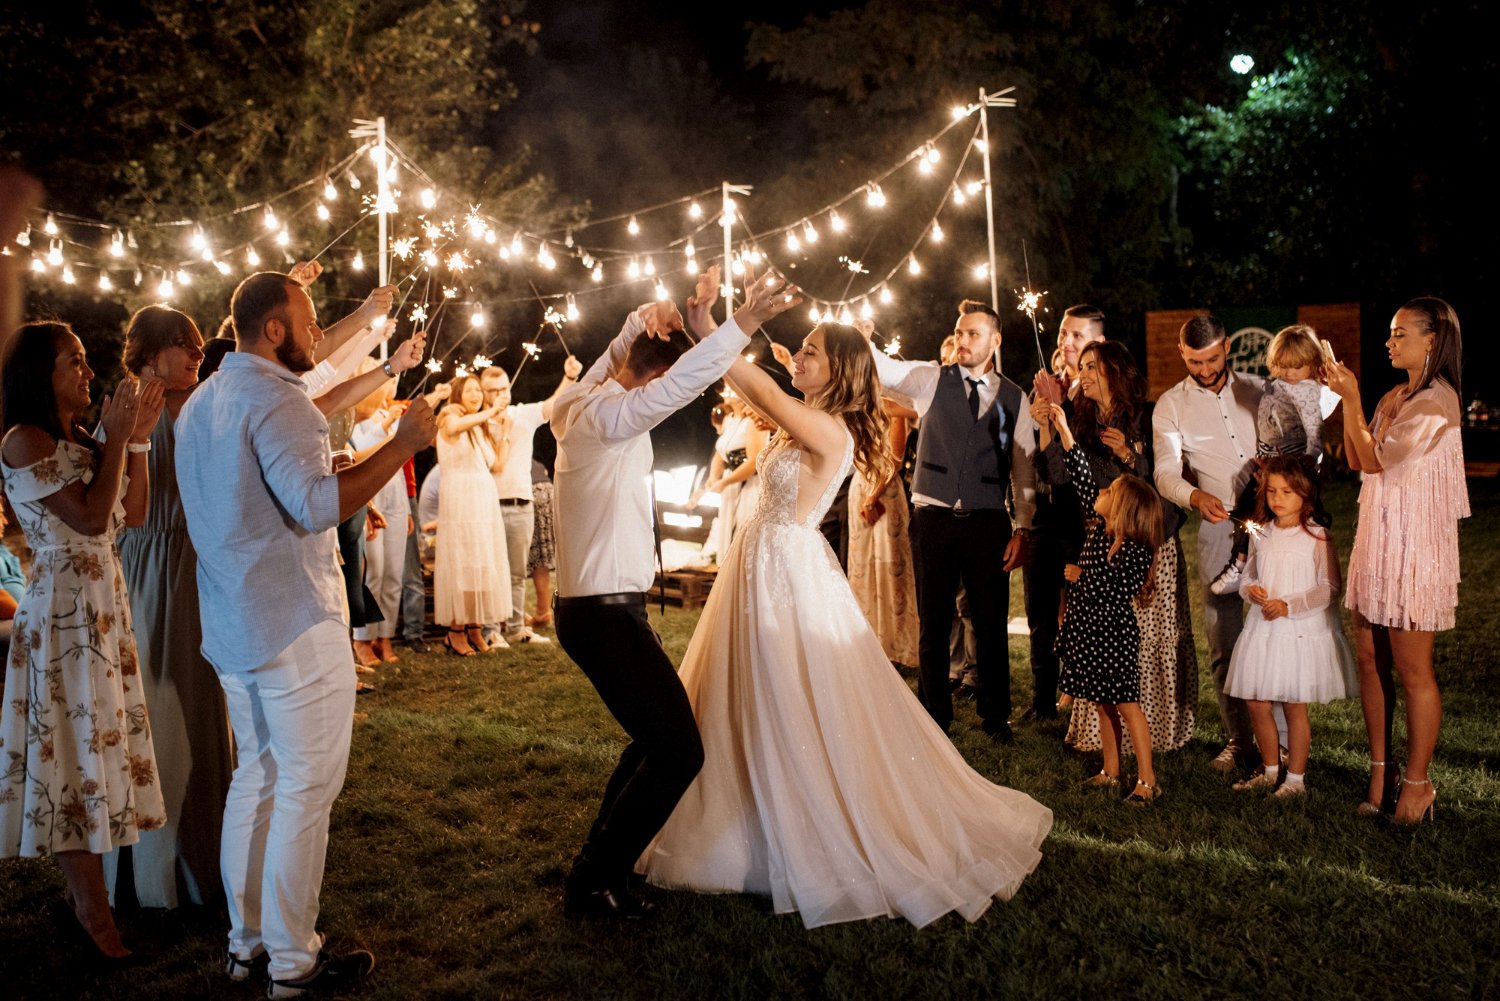 https://cardswith.love/img/cms/sparklers-wedding-newlyweds-hands-joyful-guests%20(5).jpg